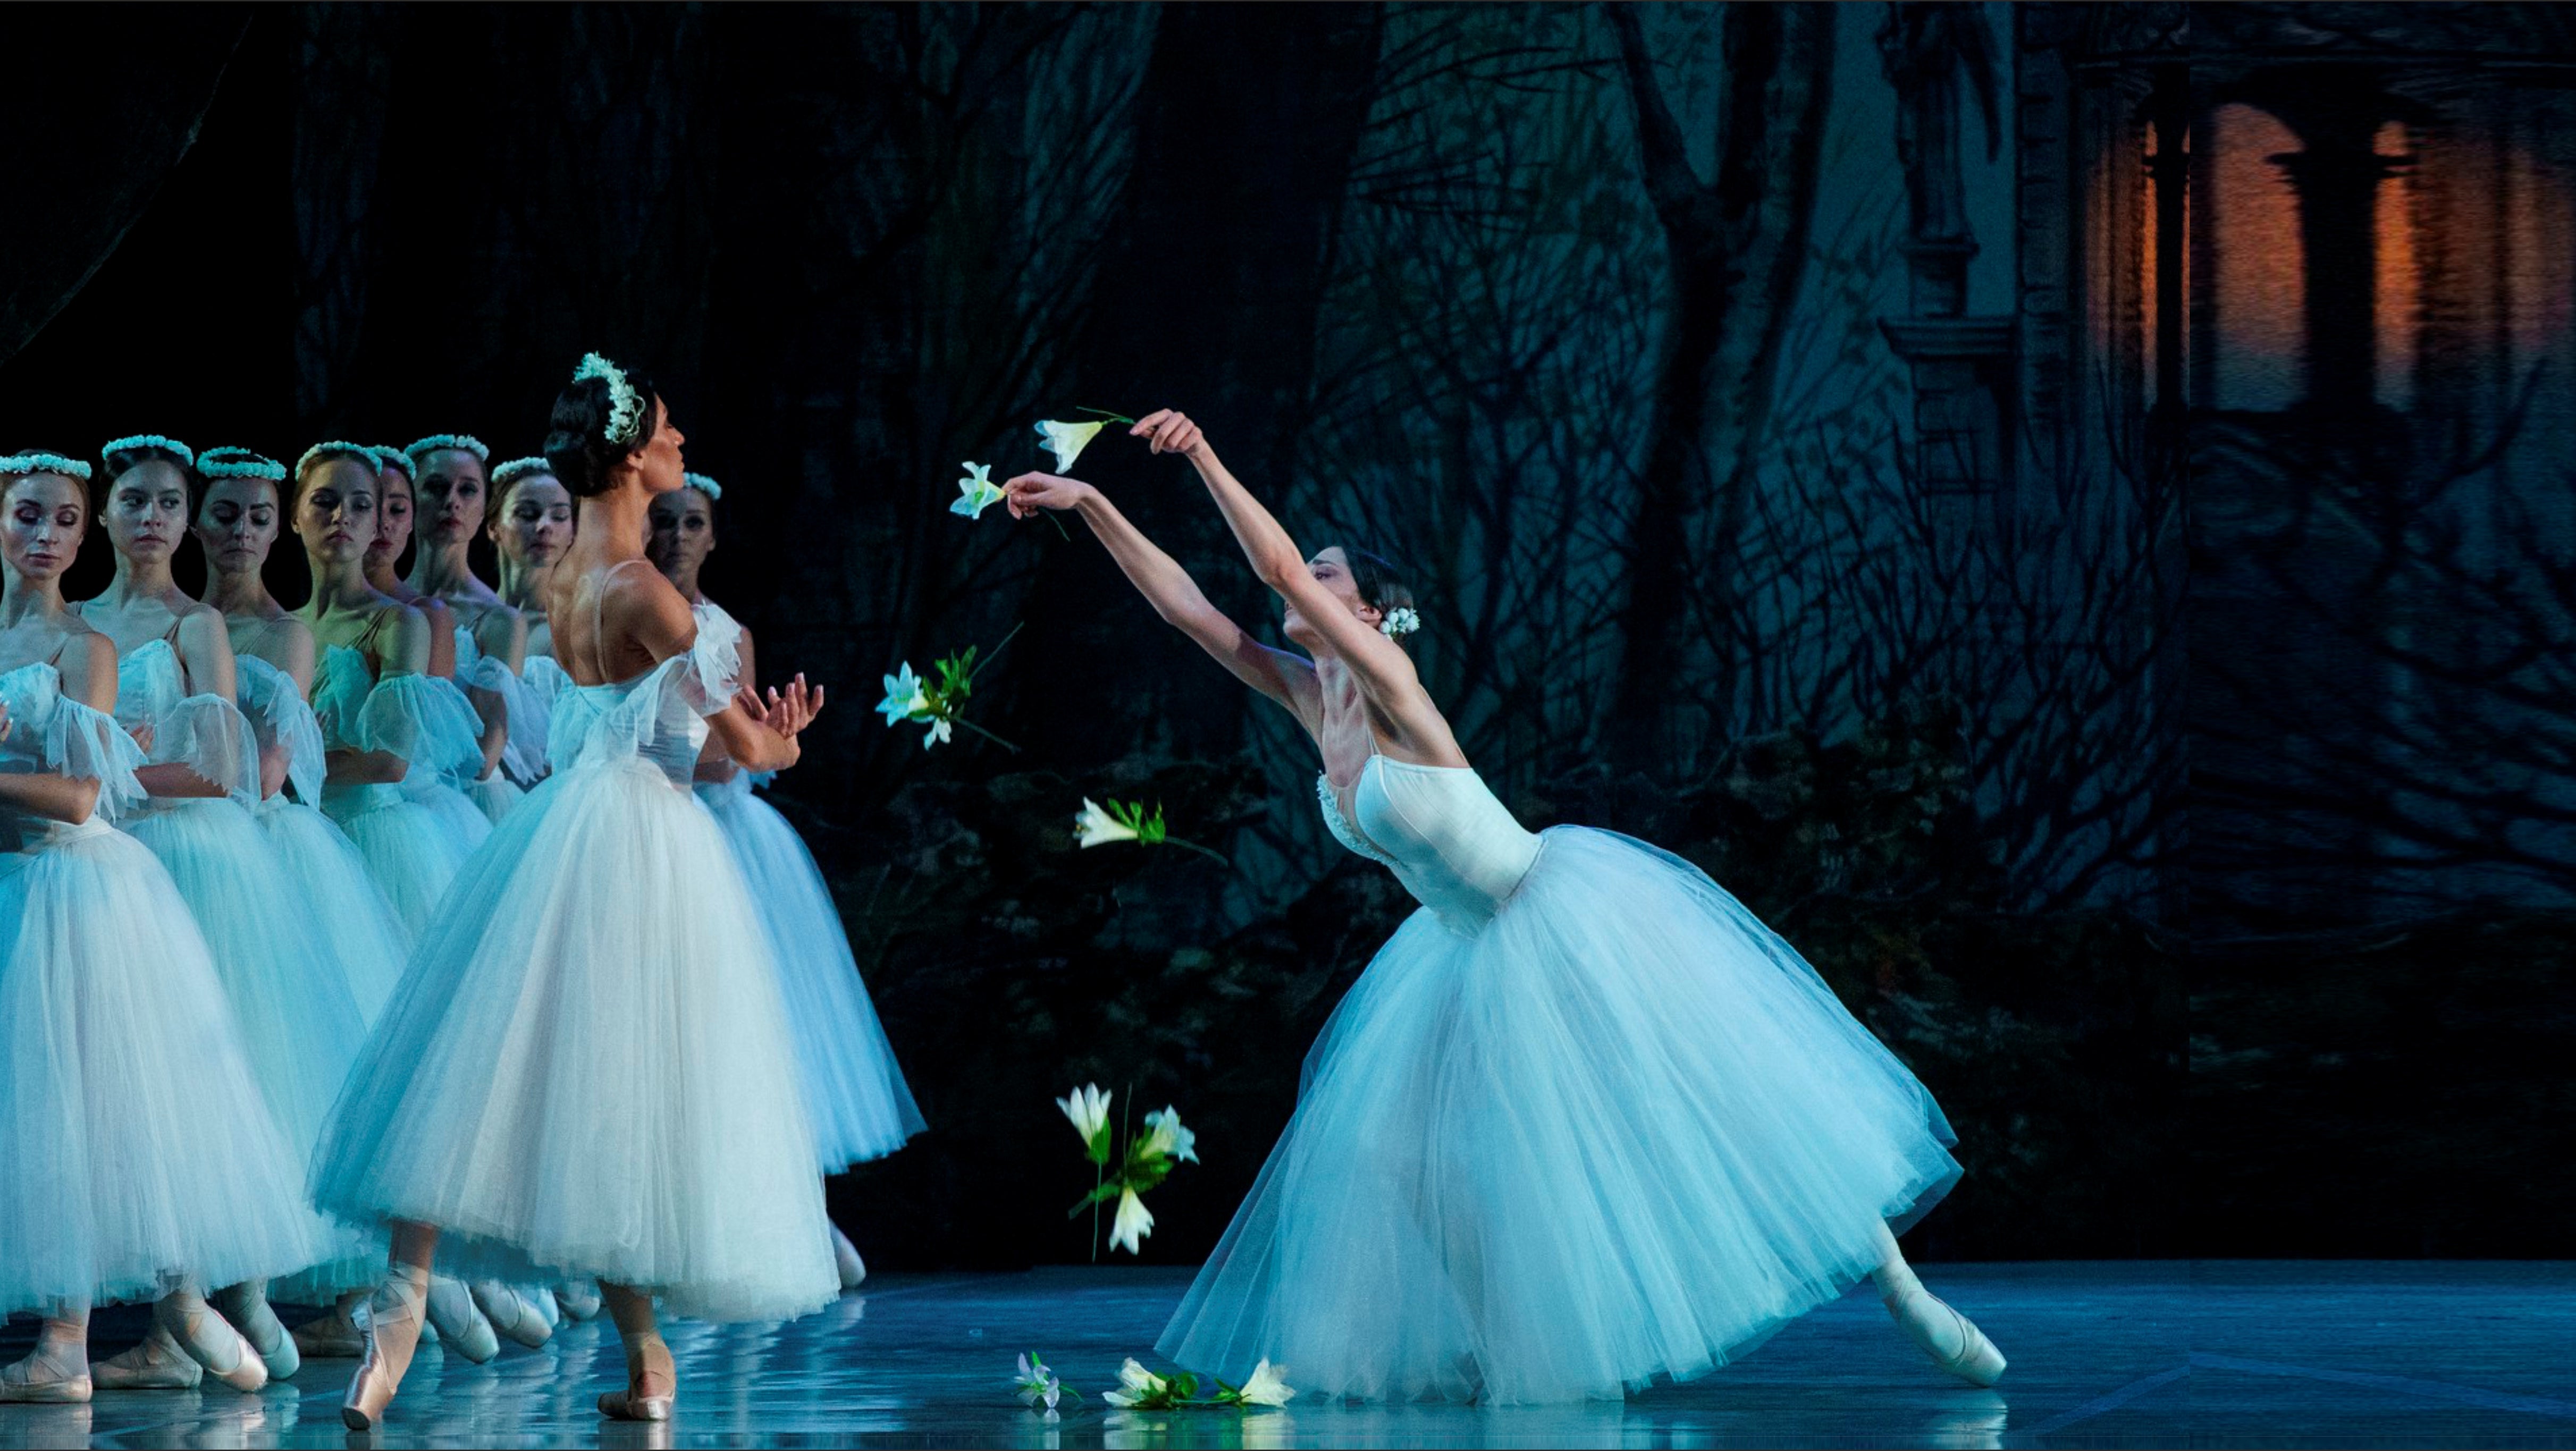 The Odesa National Academic Opera & Ballet Theatre pres. Giselle